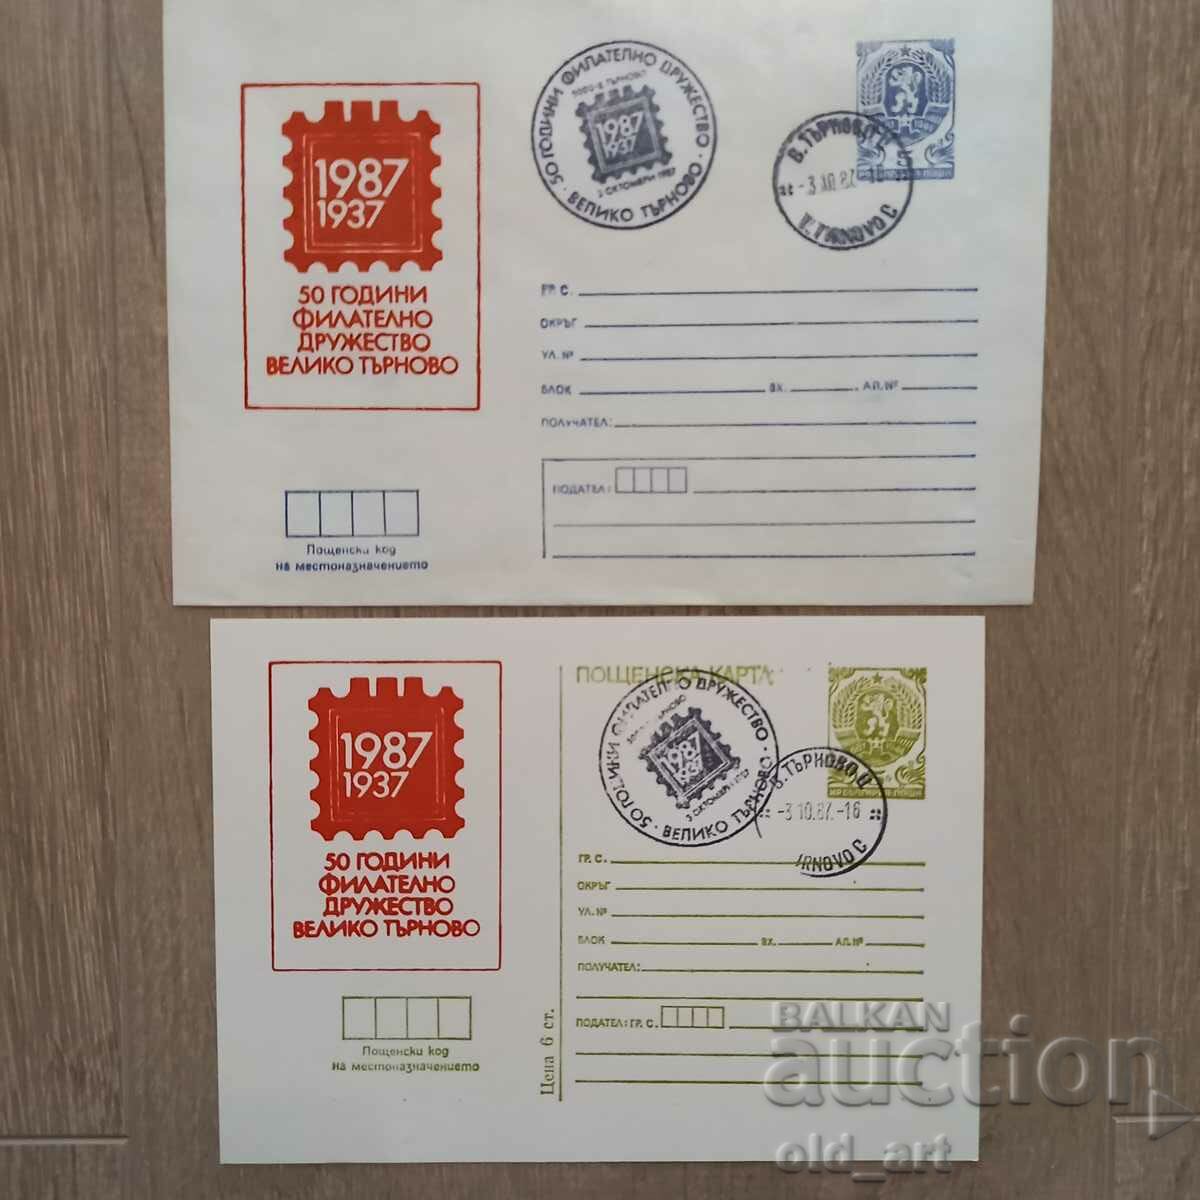 Пощенска карта и плик - 50 г. филателно дружество